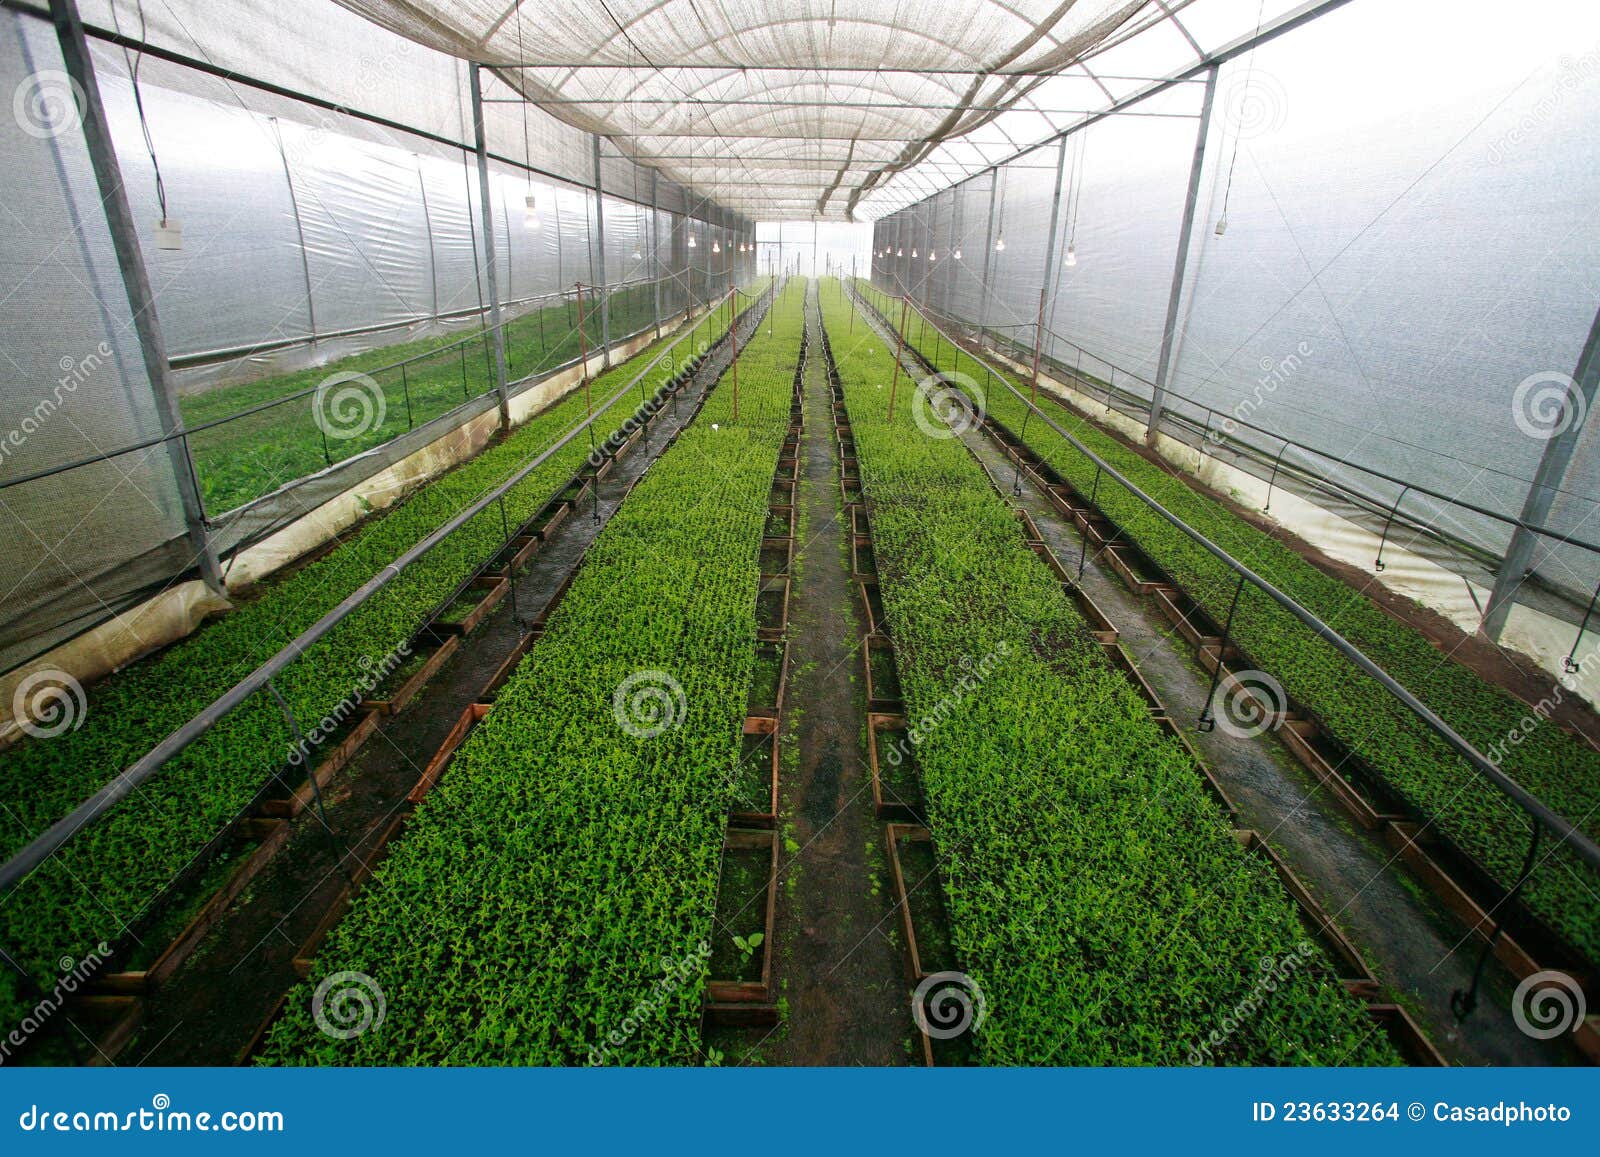 stevia in greenhouse